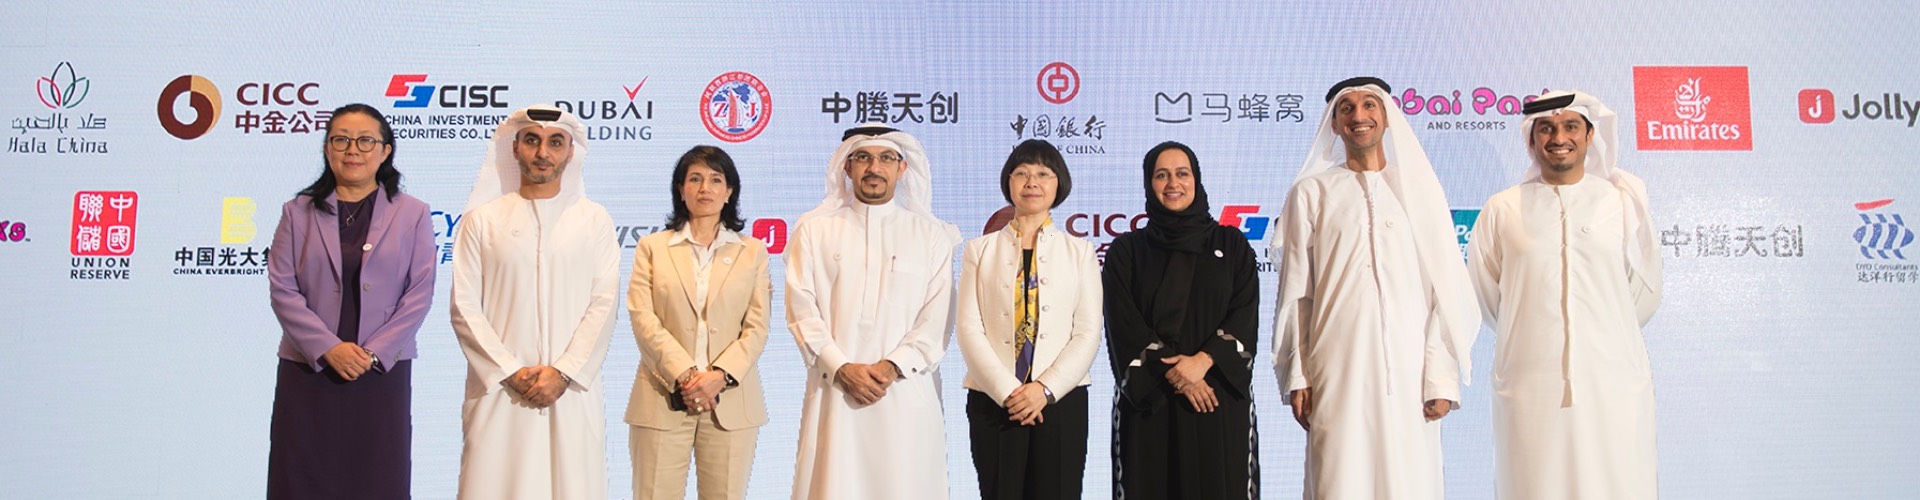 Hala China establishes Board of Directors, announces first strategic partnerships